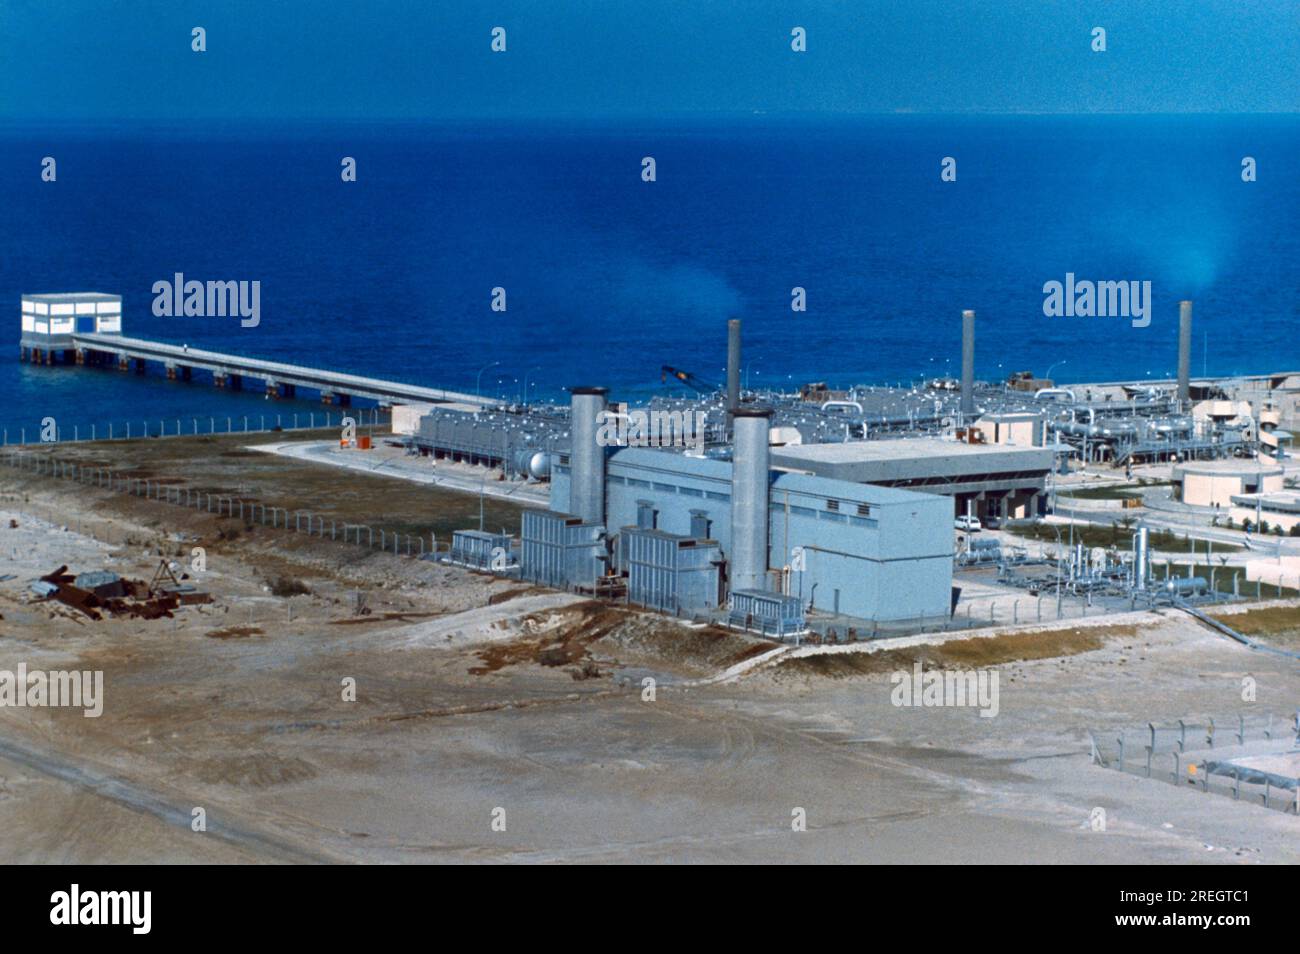 Saudi Arabia Al Khobar Desalination Plant Stock Photo